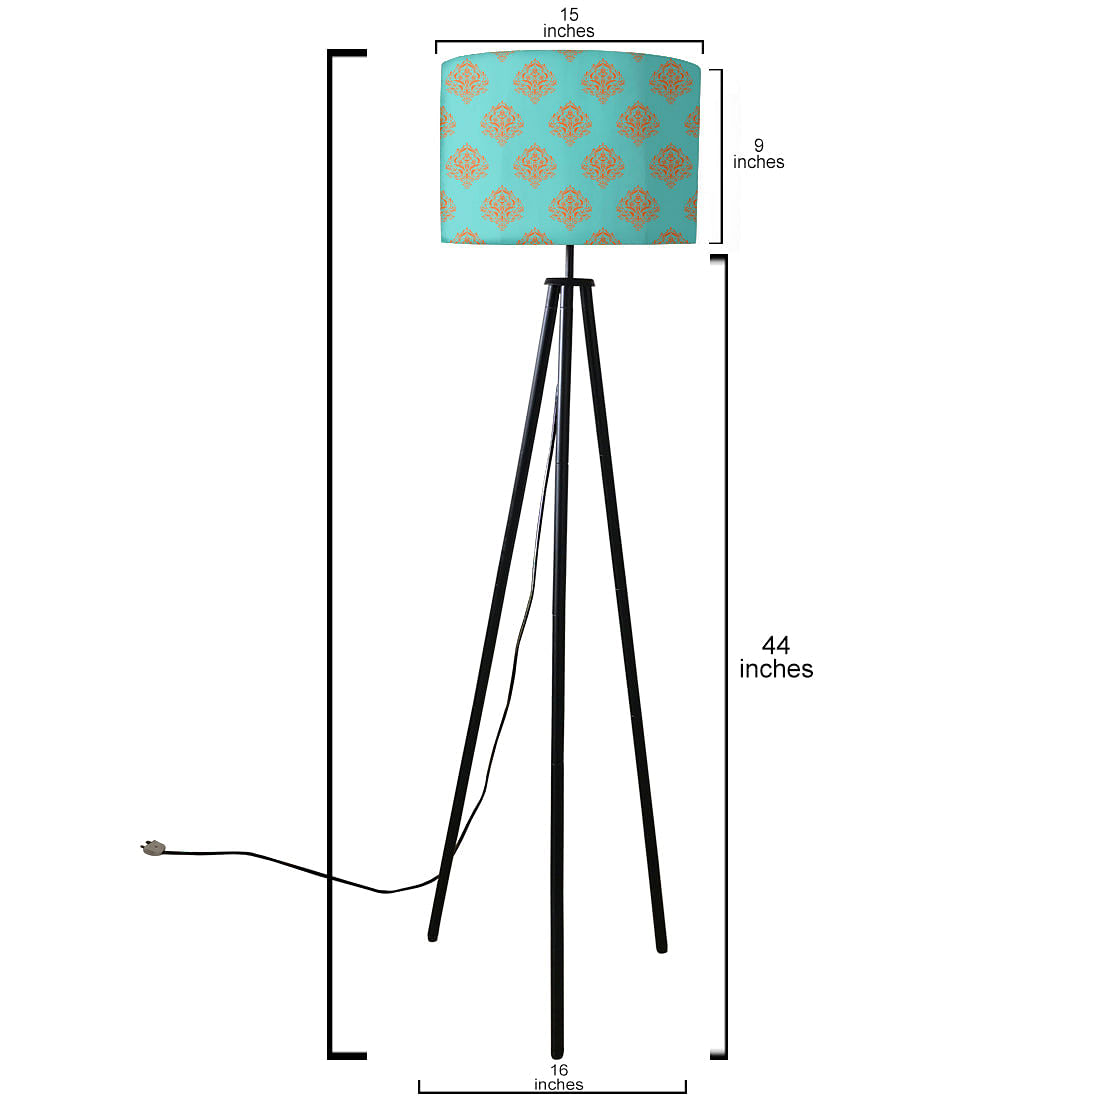 Tripod Floor Lamp Standing Light for Living Rooms -Blue Orange Damask Nutcase